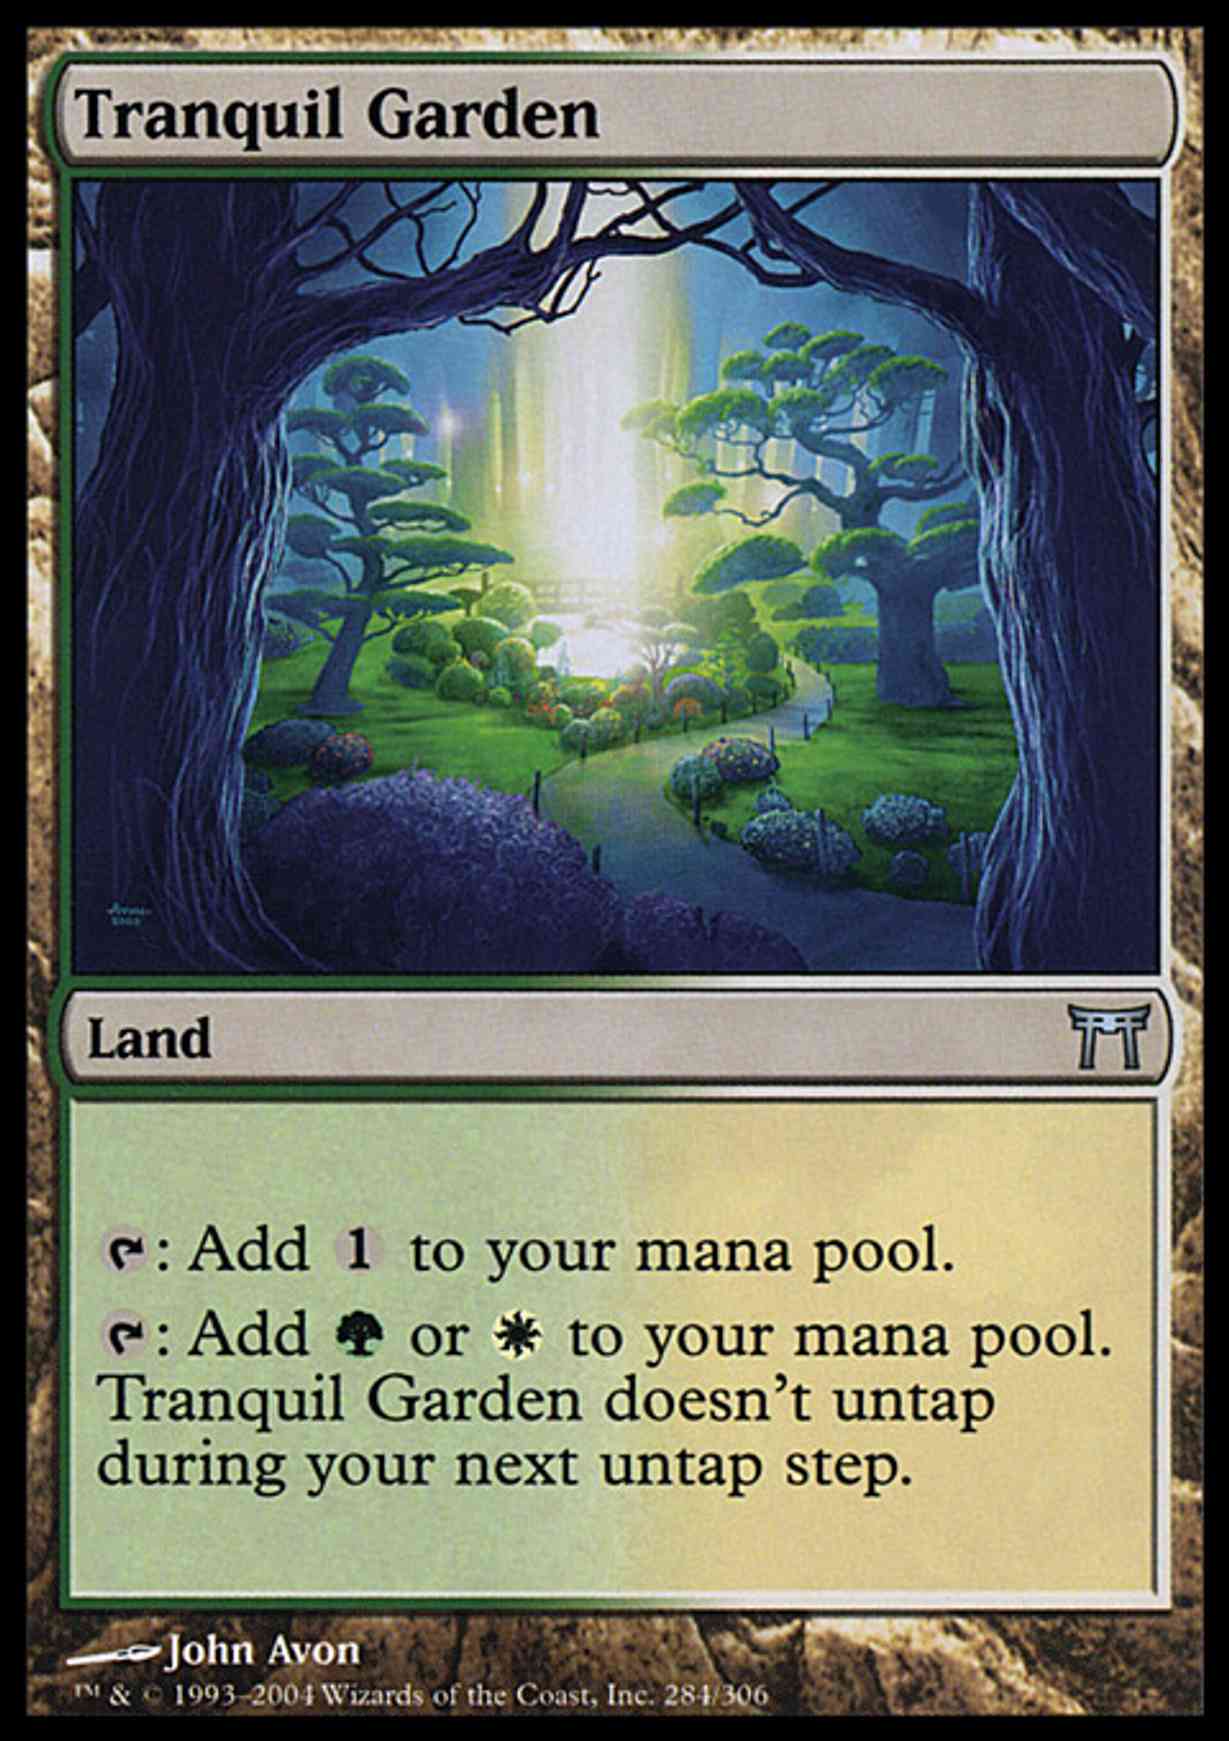 Tranquil Garden magic card front